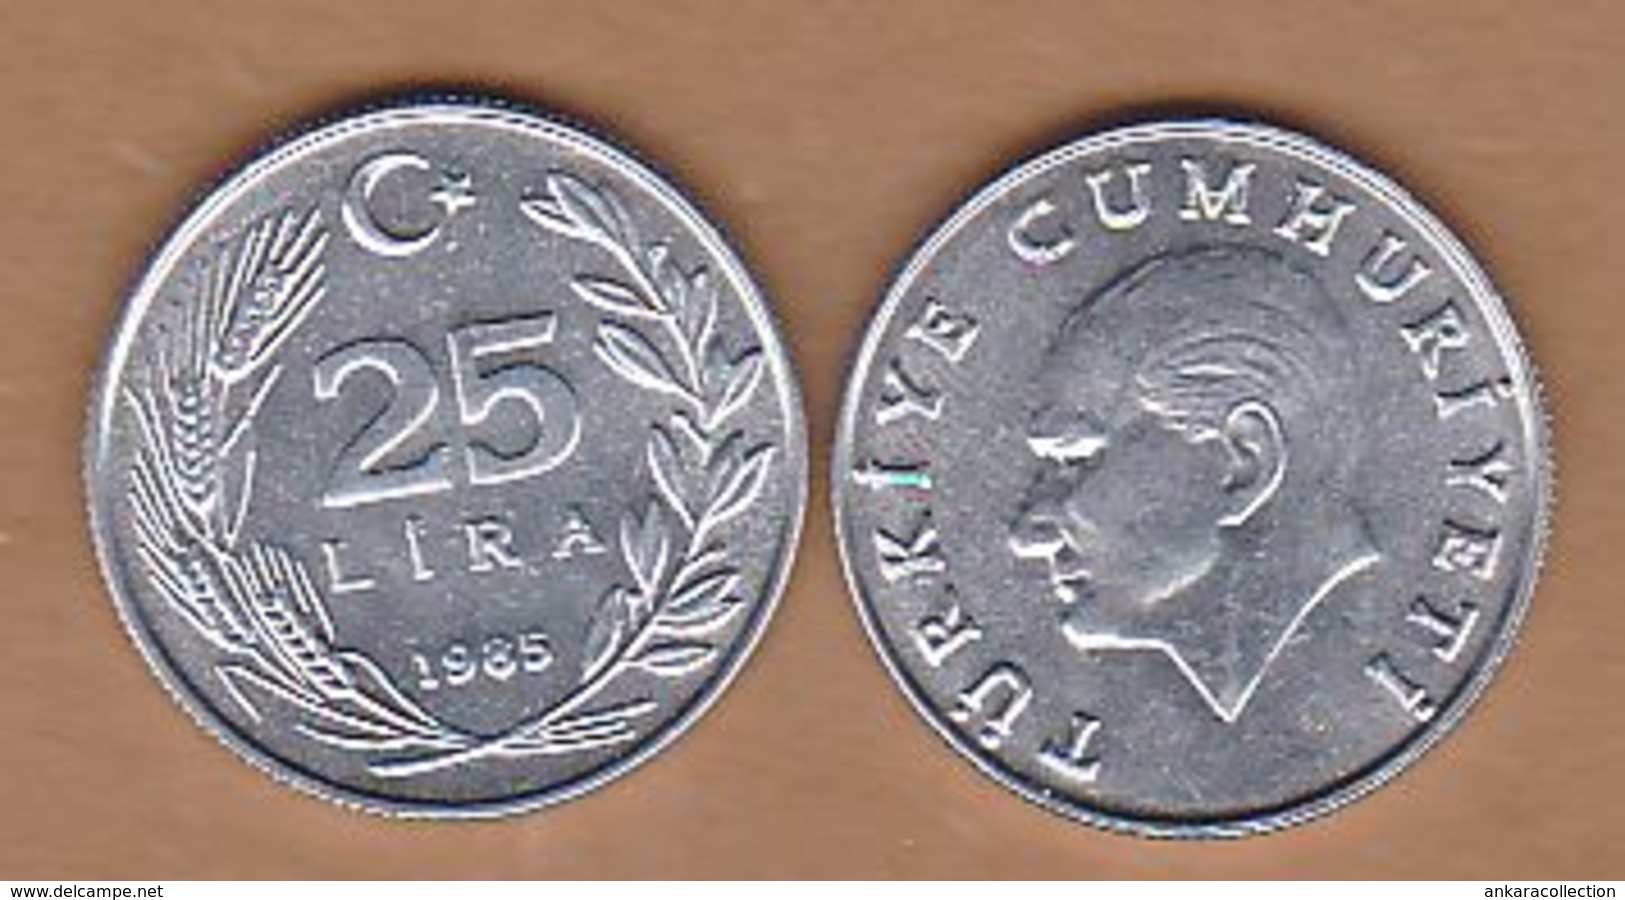 AC - TURKEY 25 LIRA 1985 ALUMINUM COIN KM#975 UNCIRCULATED - Turquie